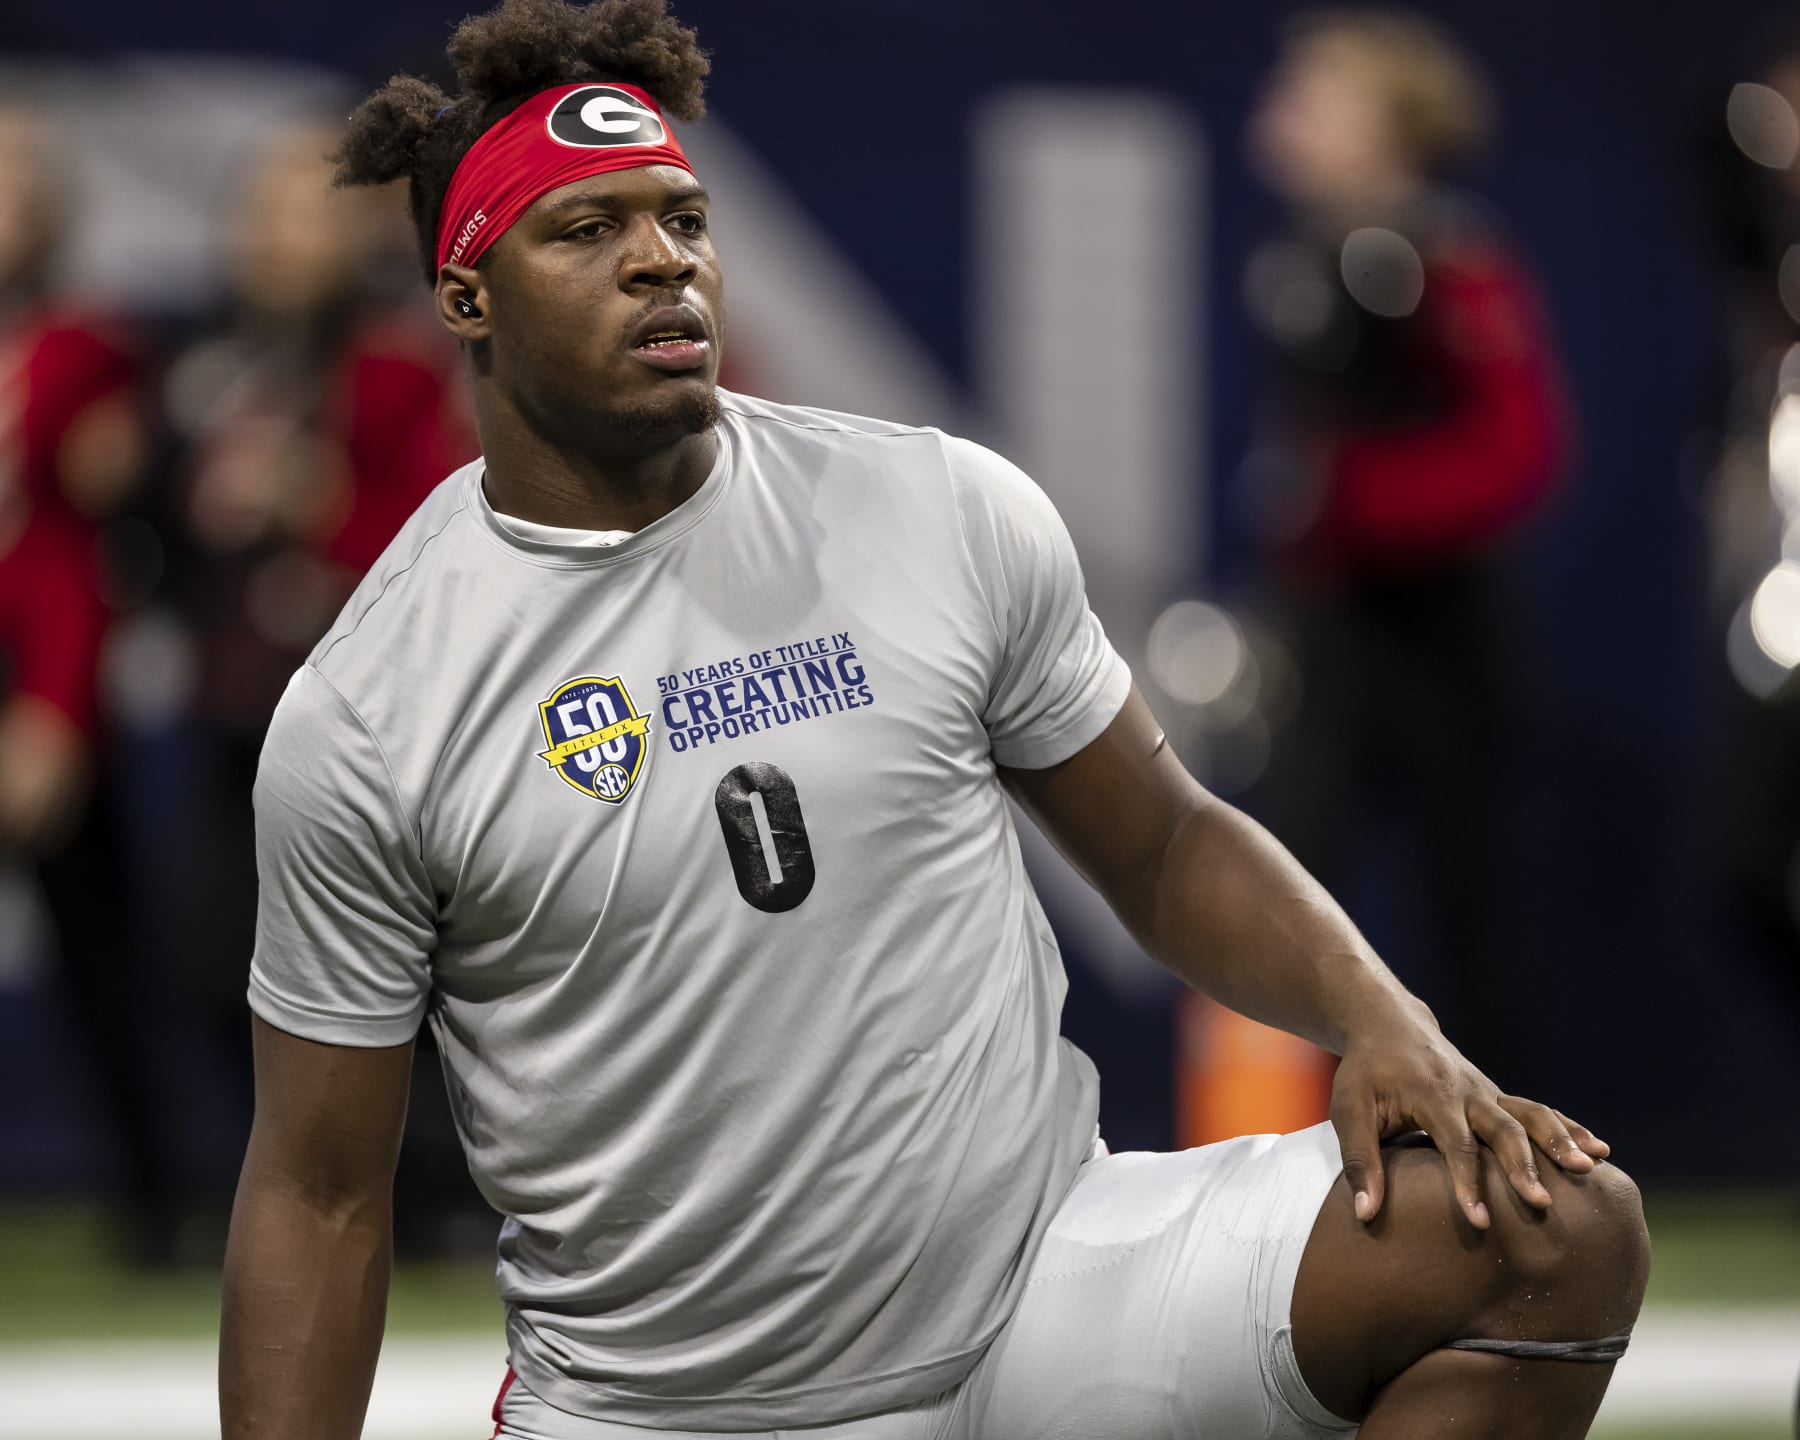 Darnell Washington: NFL Draft projections for Georgia football star